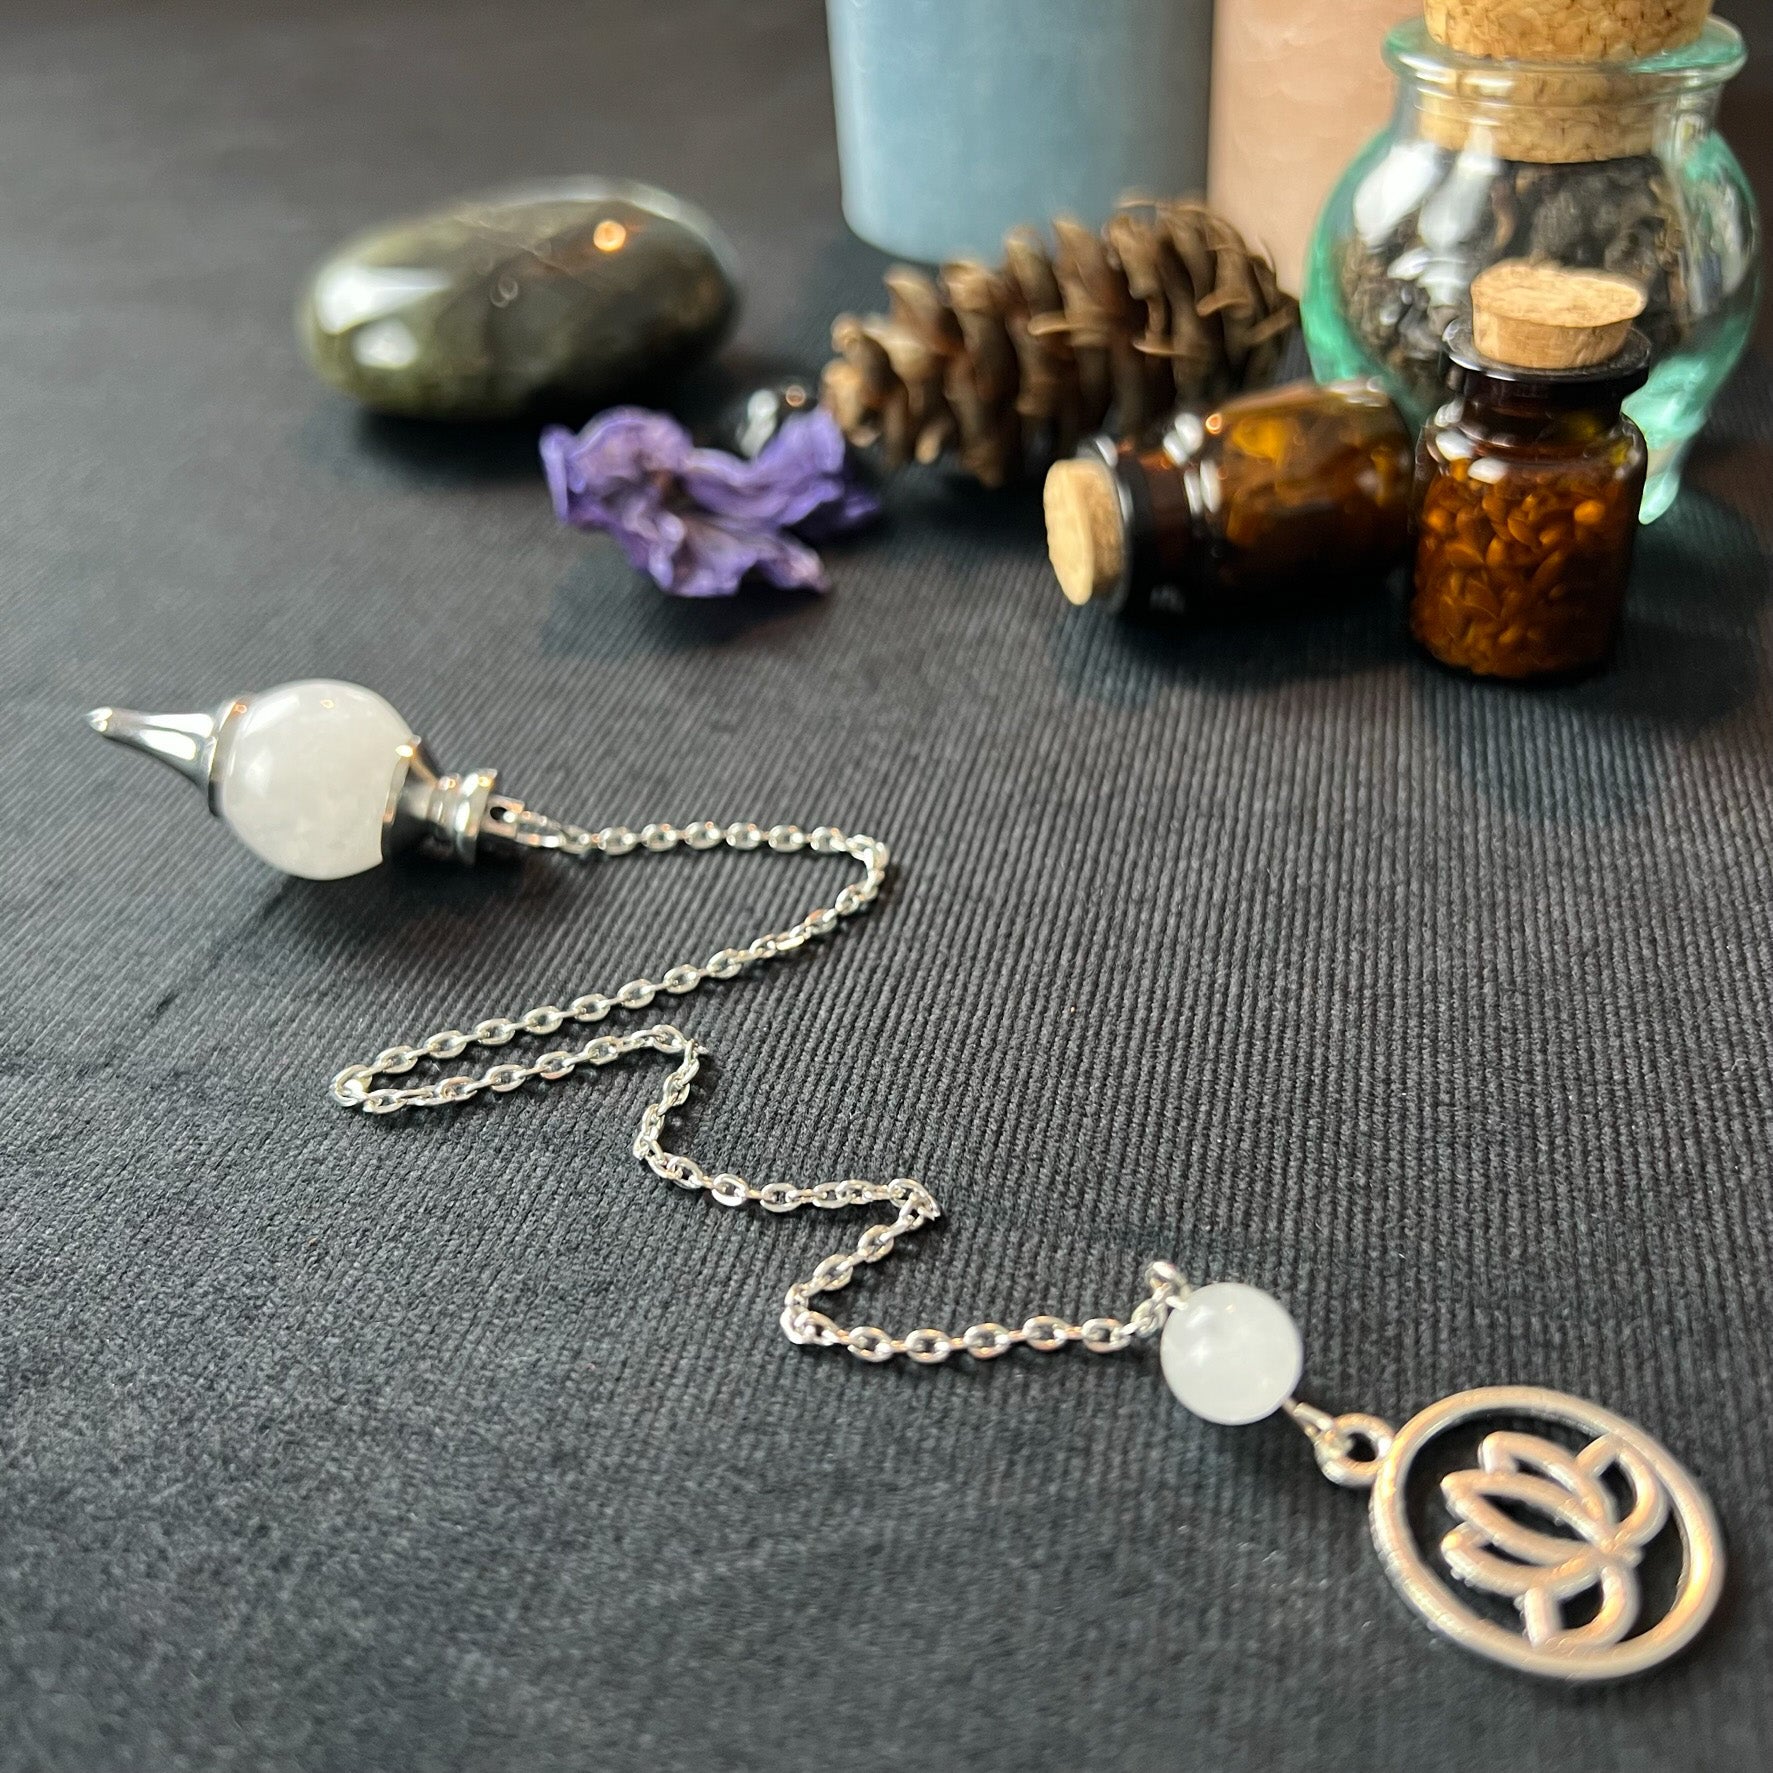 Clear quartz and lotus Sephoroton dowsing pendulum - The French Witch shop